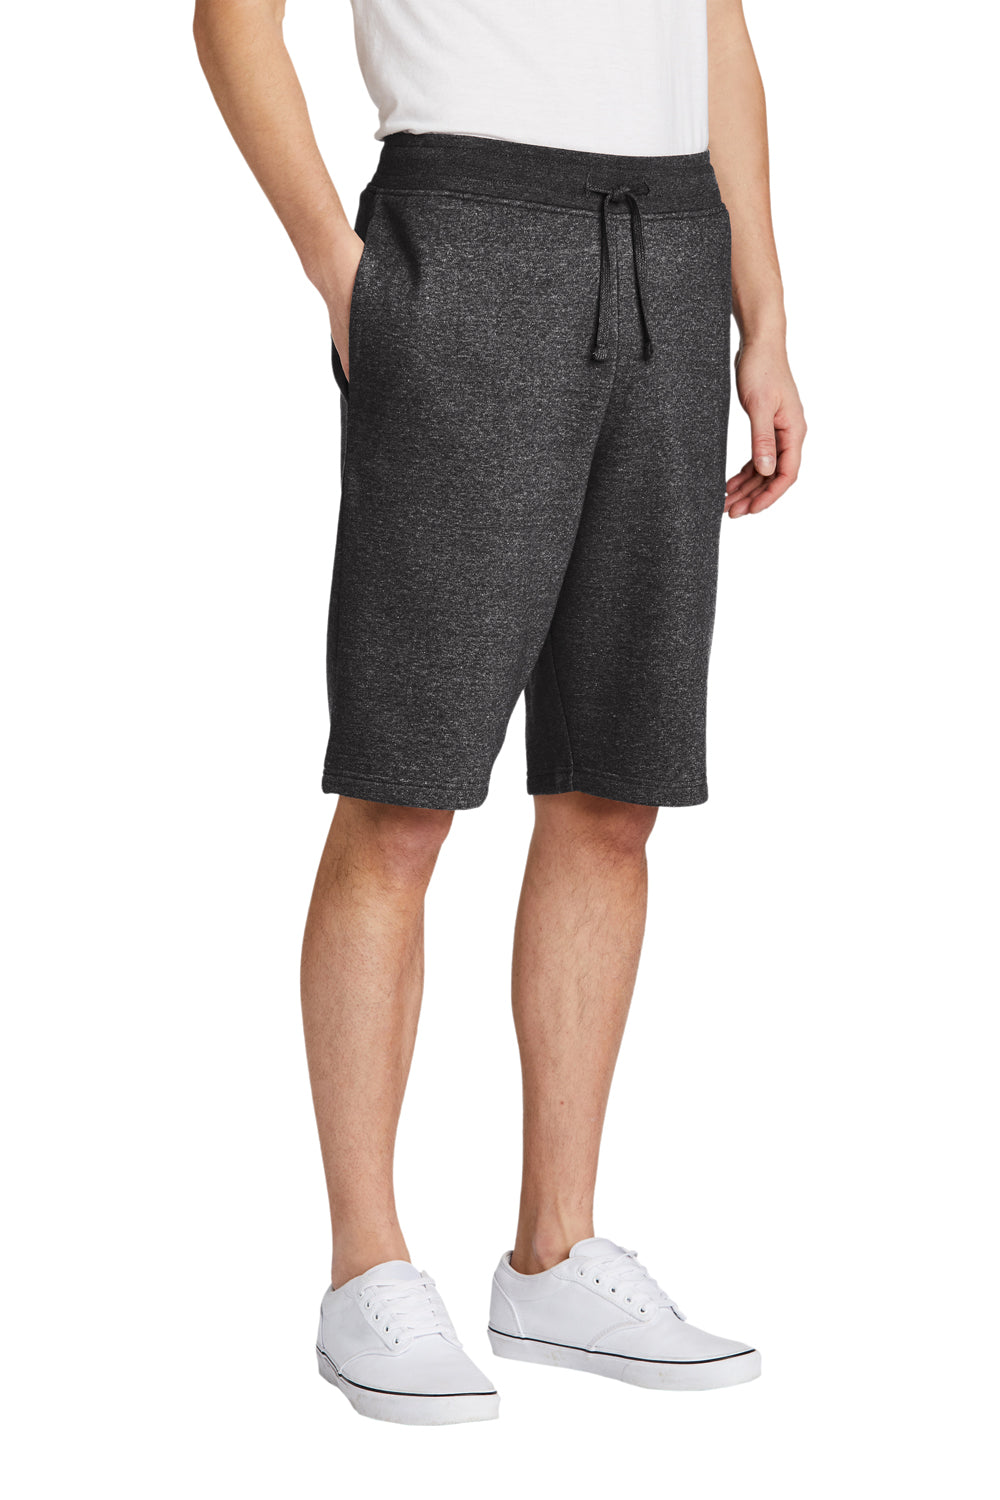 District DT6108 V.I.T. Fleece Shorts w/ Pockets Heathered Charcoal Grey 3Q